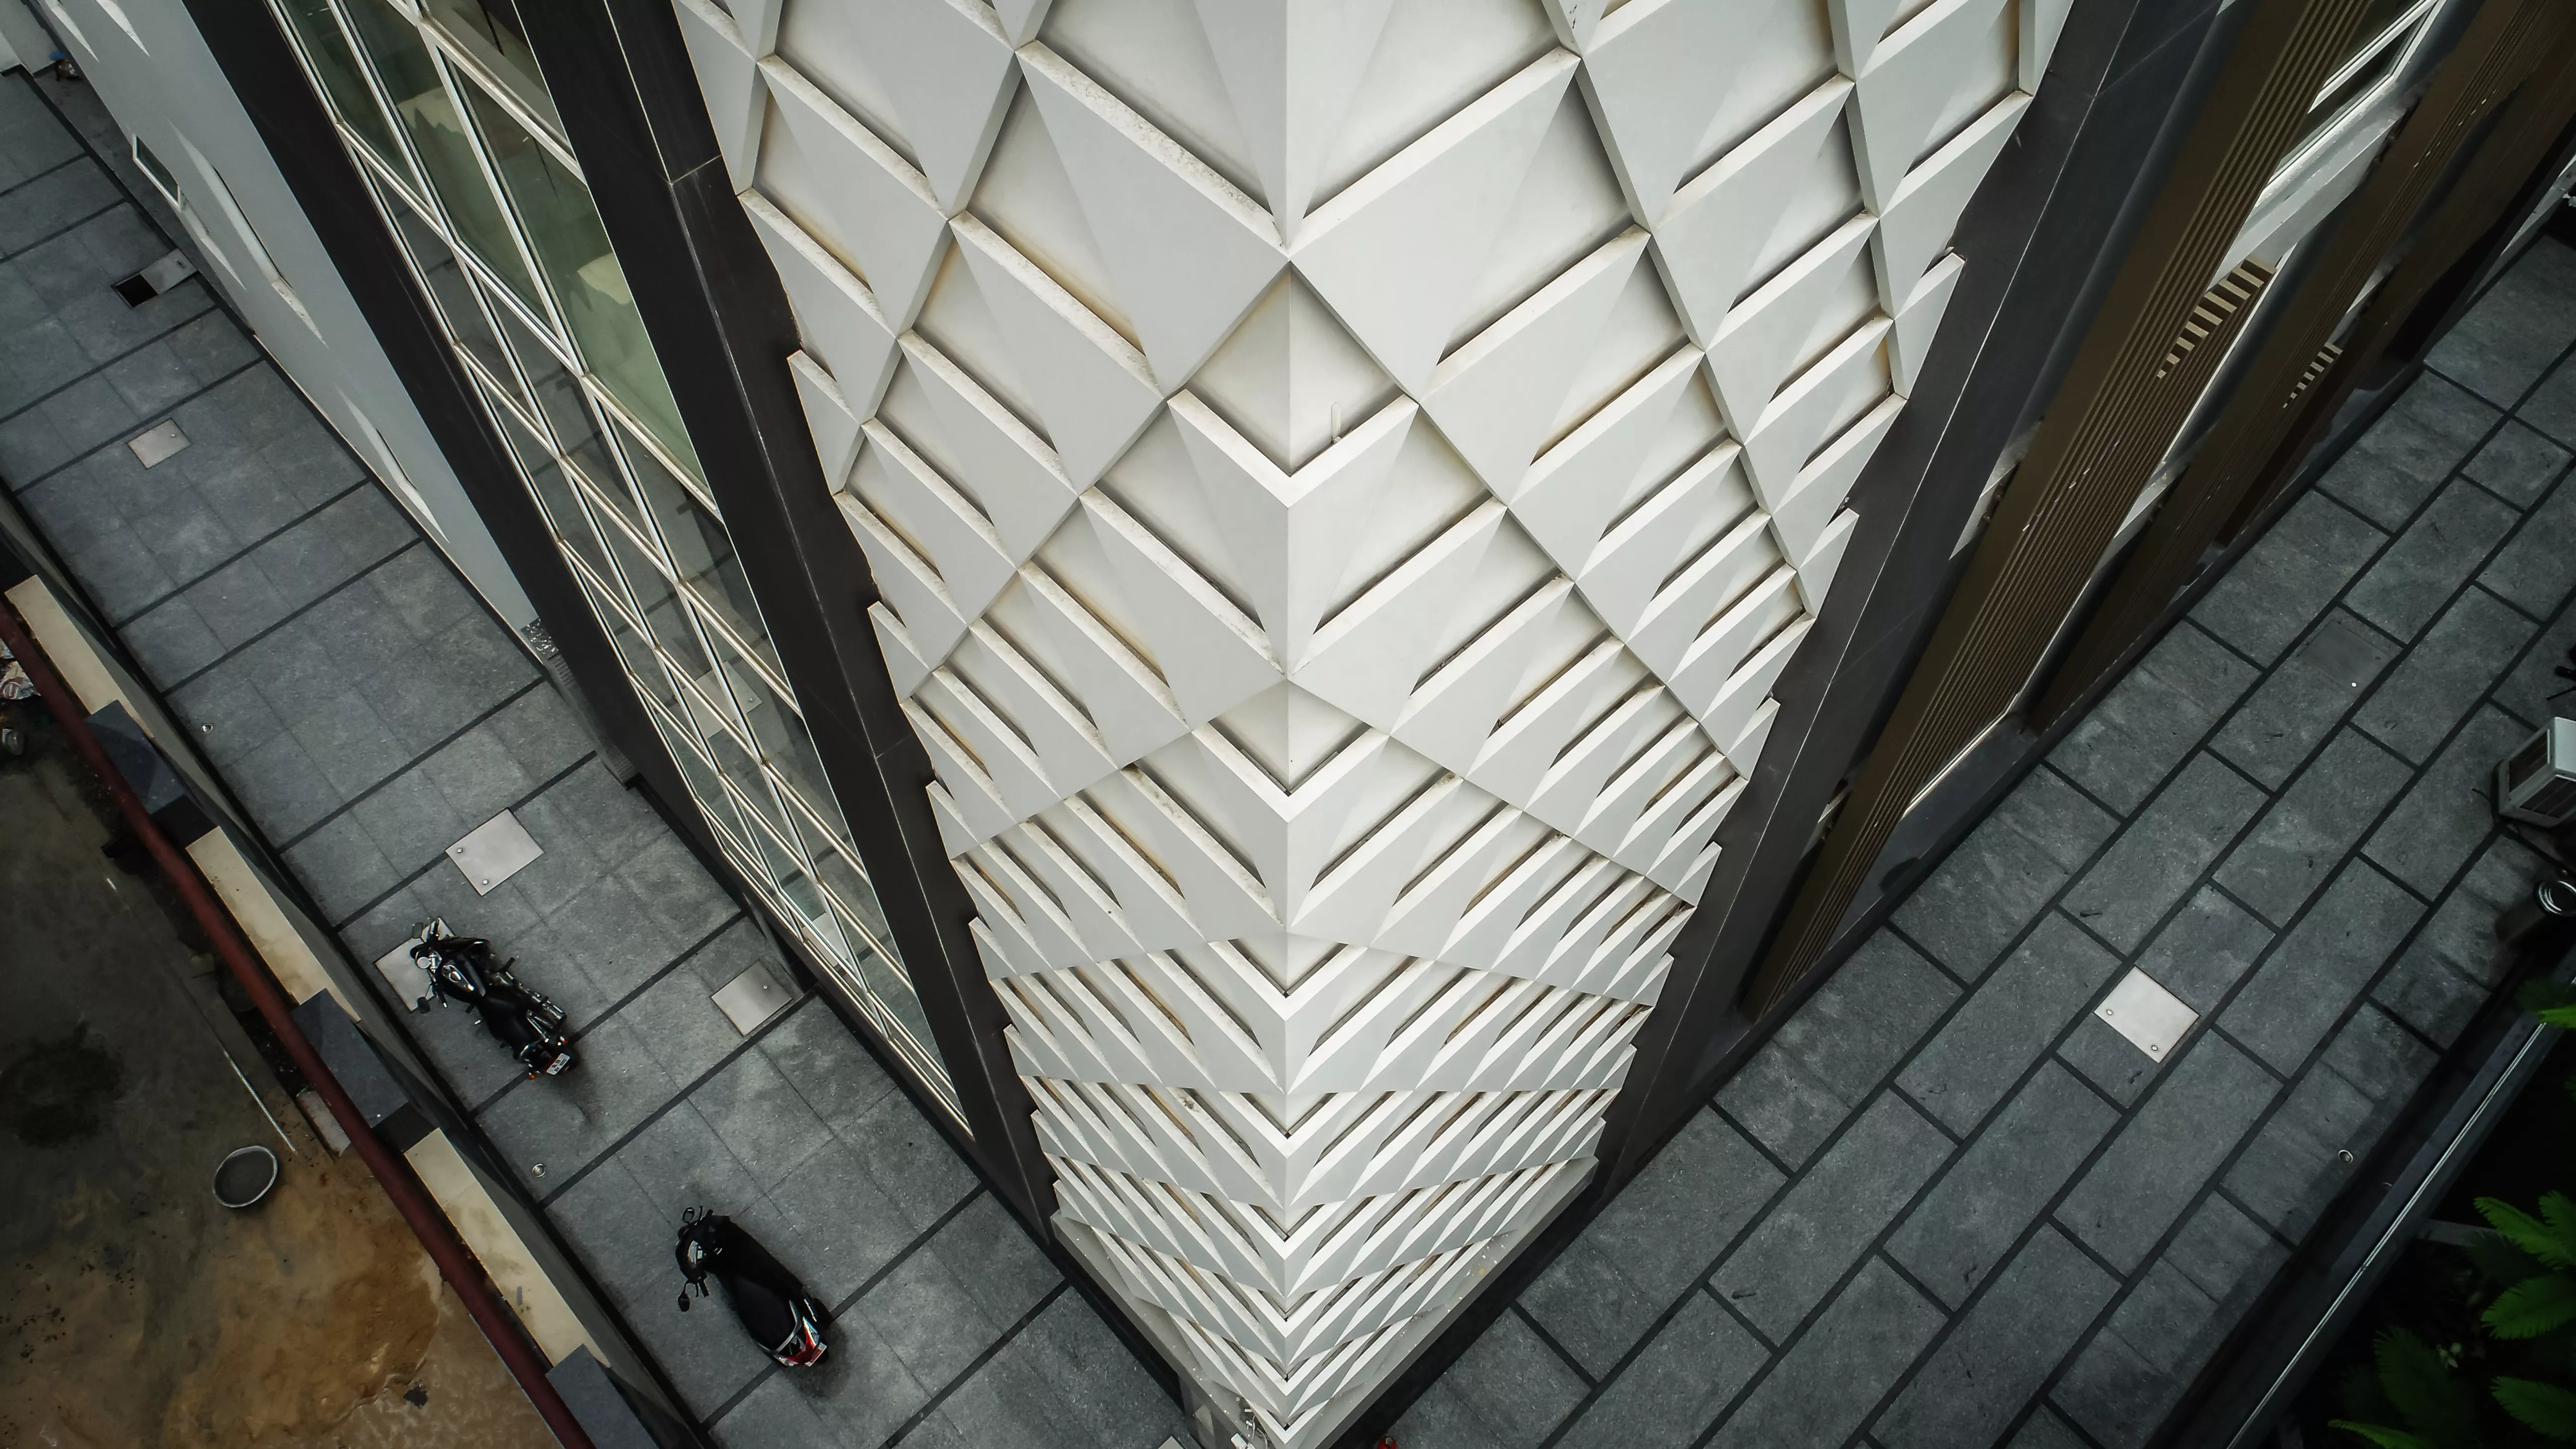 A sculptural, geometric façade made of HIMACS for JK House